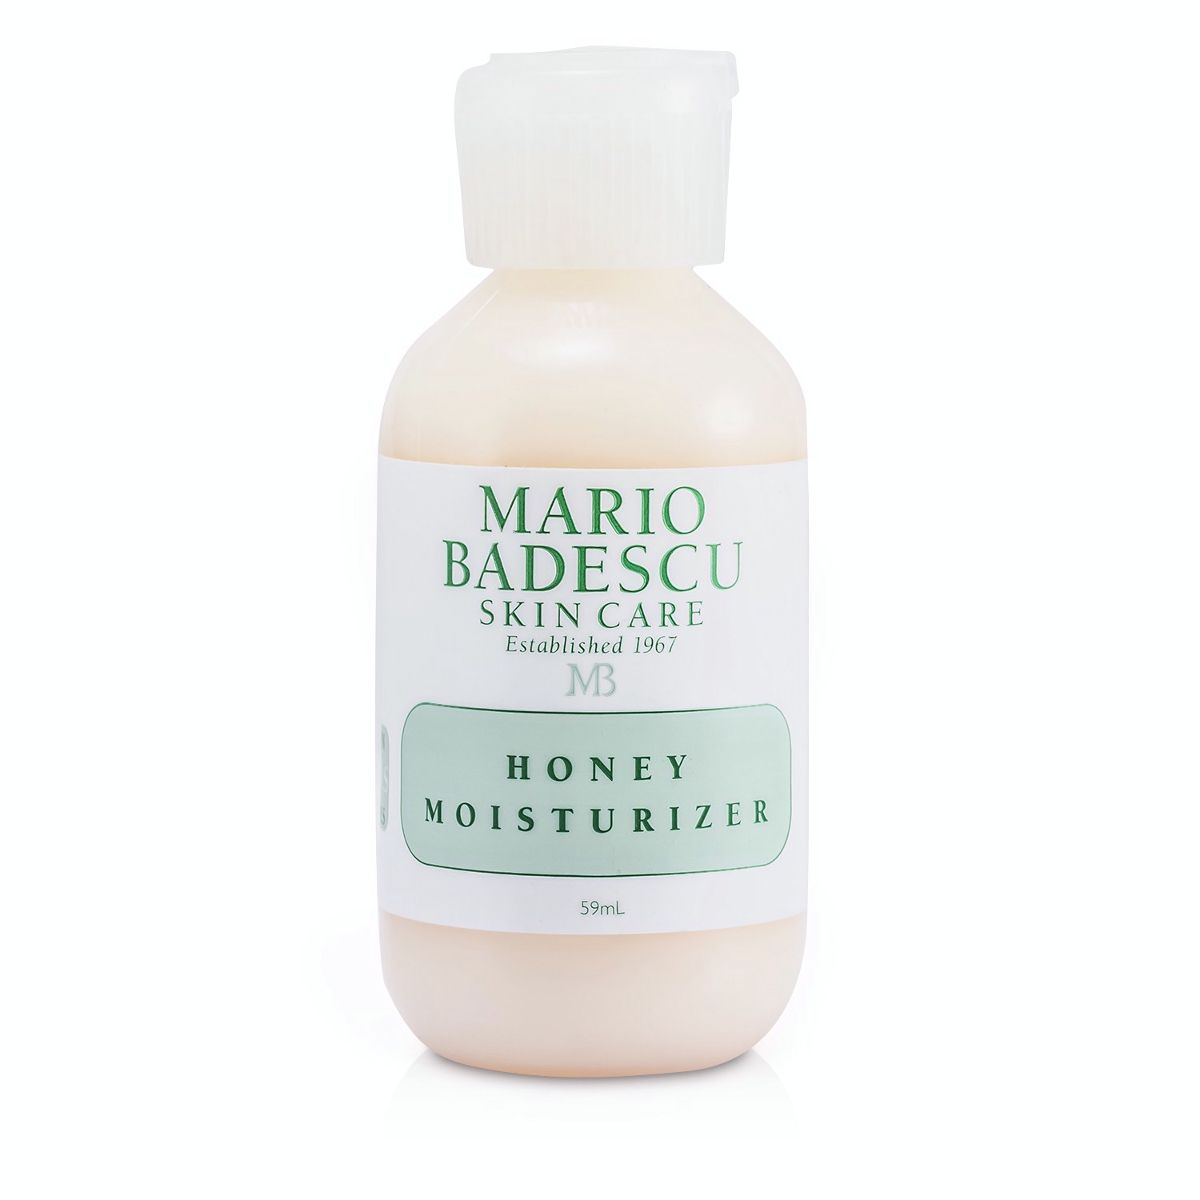 Honey Moisturizer - For Combination/ Dry/ Sensitive Skin Types Mario Badescu Image